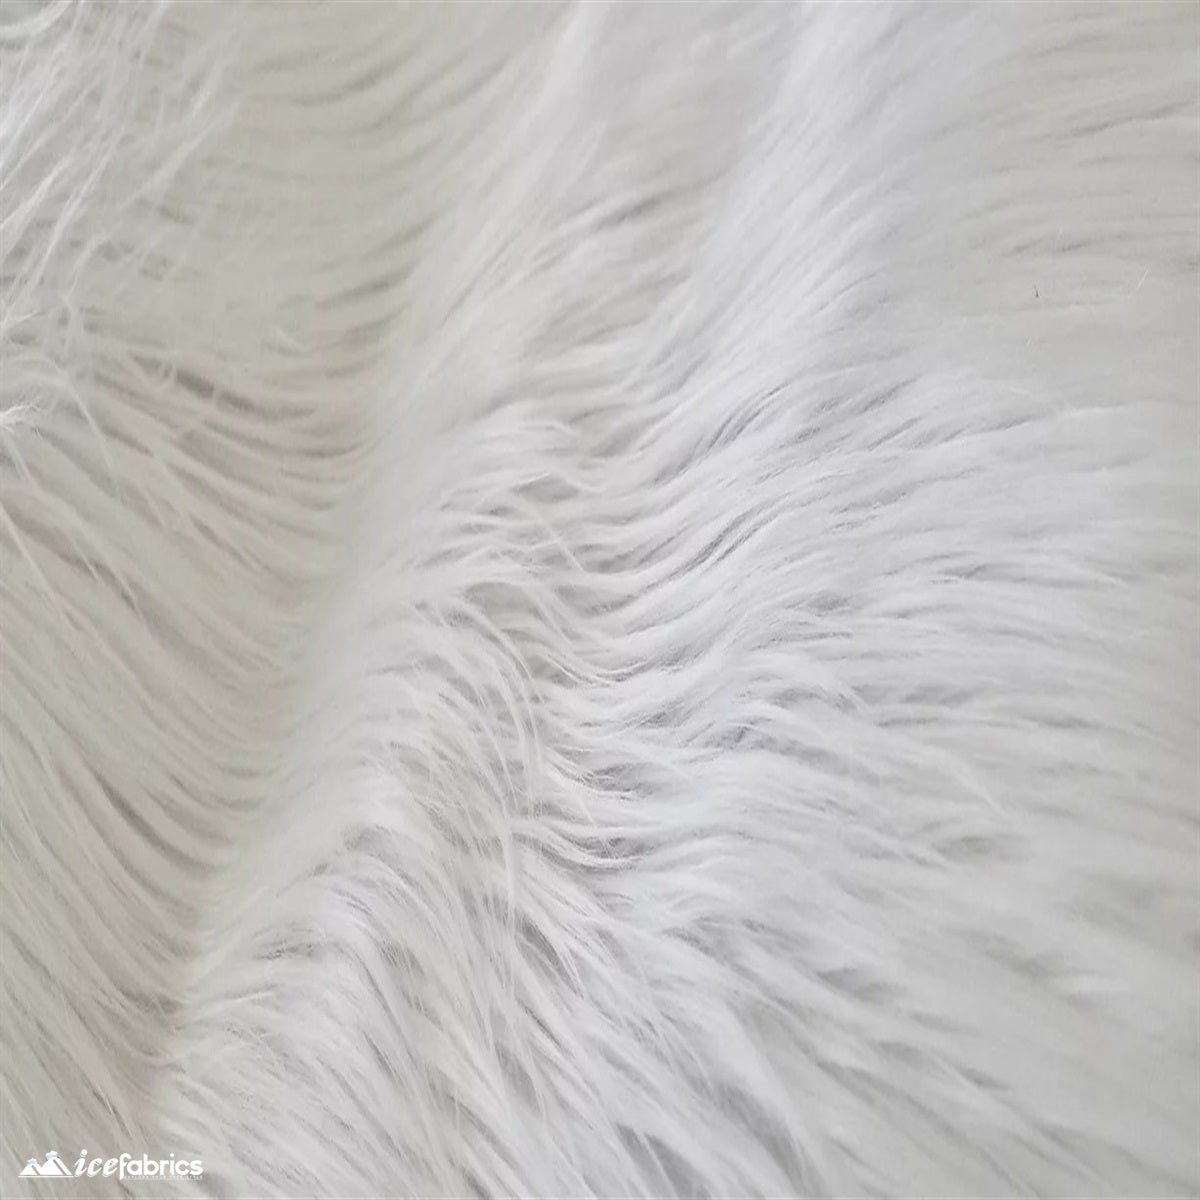 Shaggy Mohair Faux Fur Fabric/ 4 Inches Long PileICE FABRICSICE FABRICSWhite1/2 Yard (60 inches Wide)Shaggy Mohair Faux Fur Fabric/ 4 Inches Long Pile ICE FABRICS